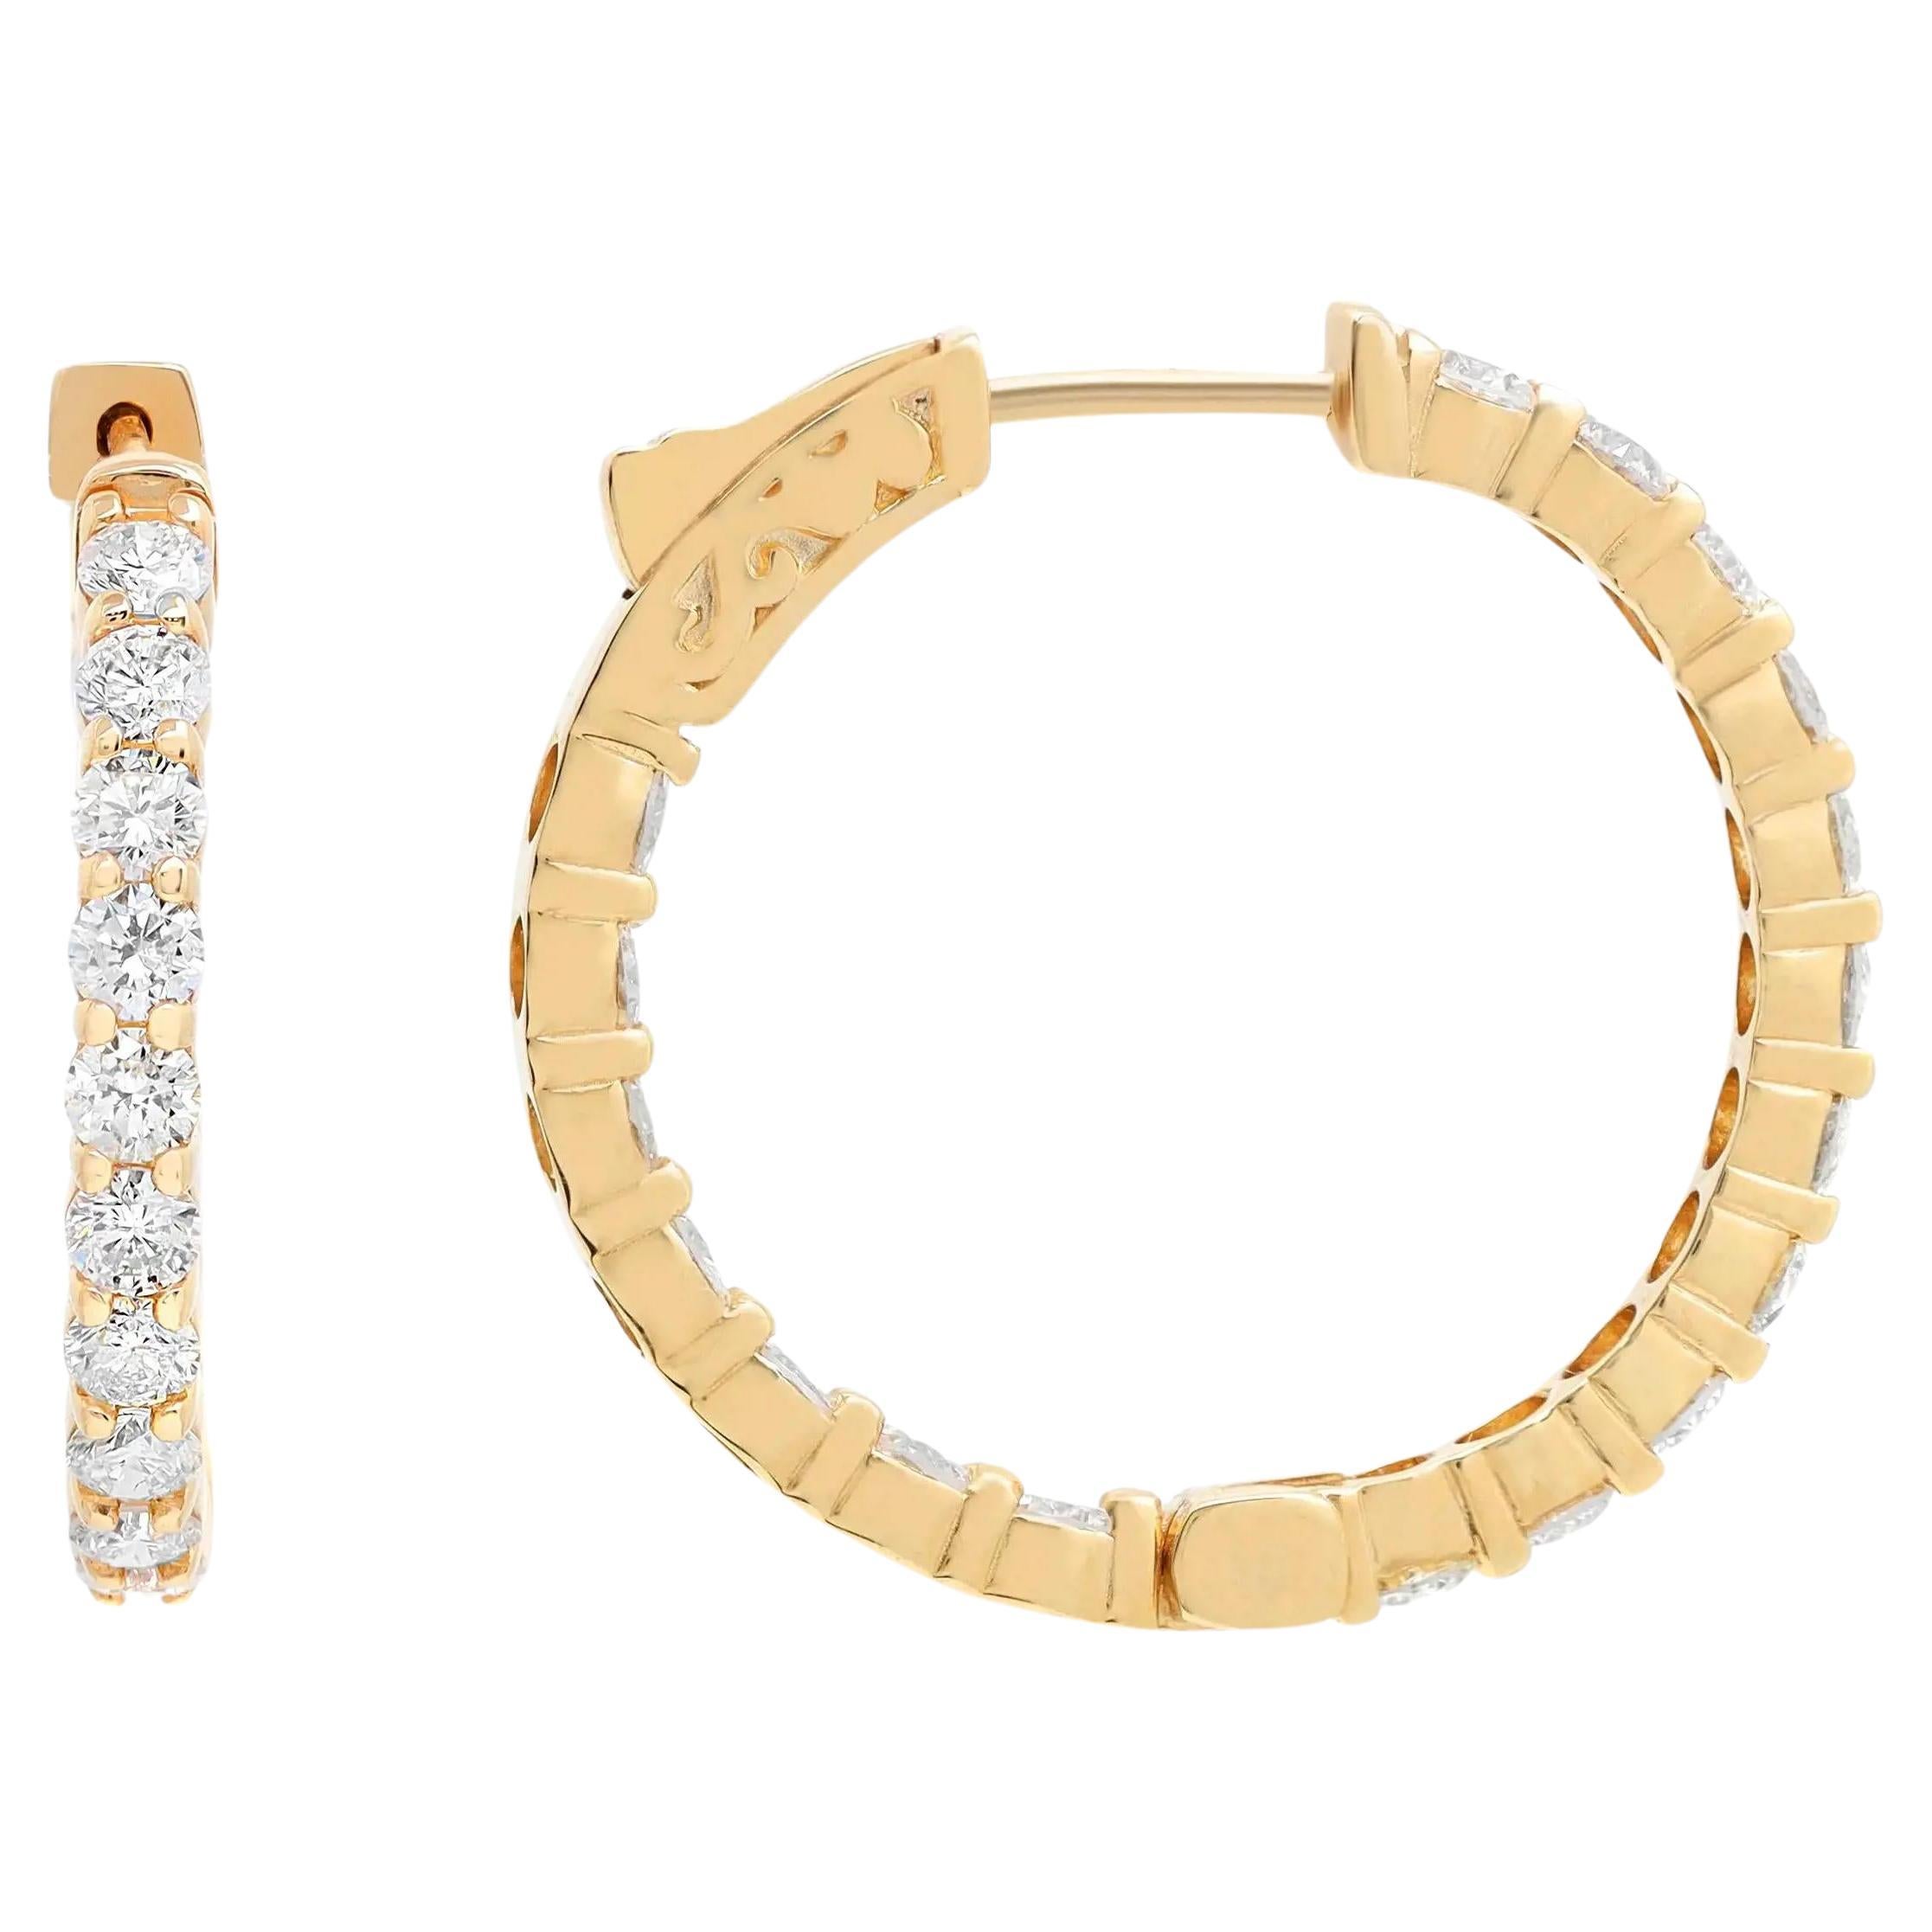 Rachel Koen Inside Out Diamond Hoop Earrings 14K White Gold 4.91Cttw